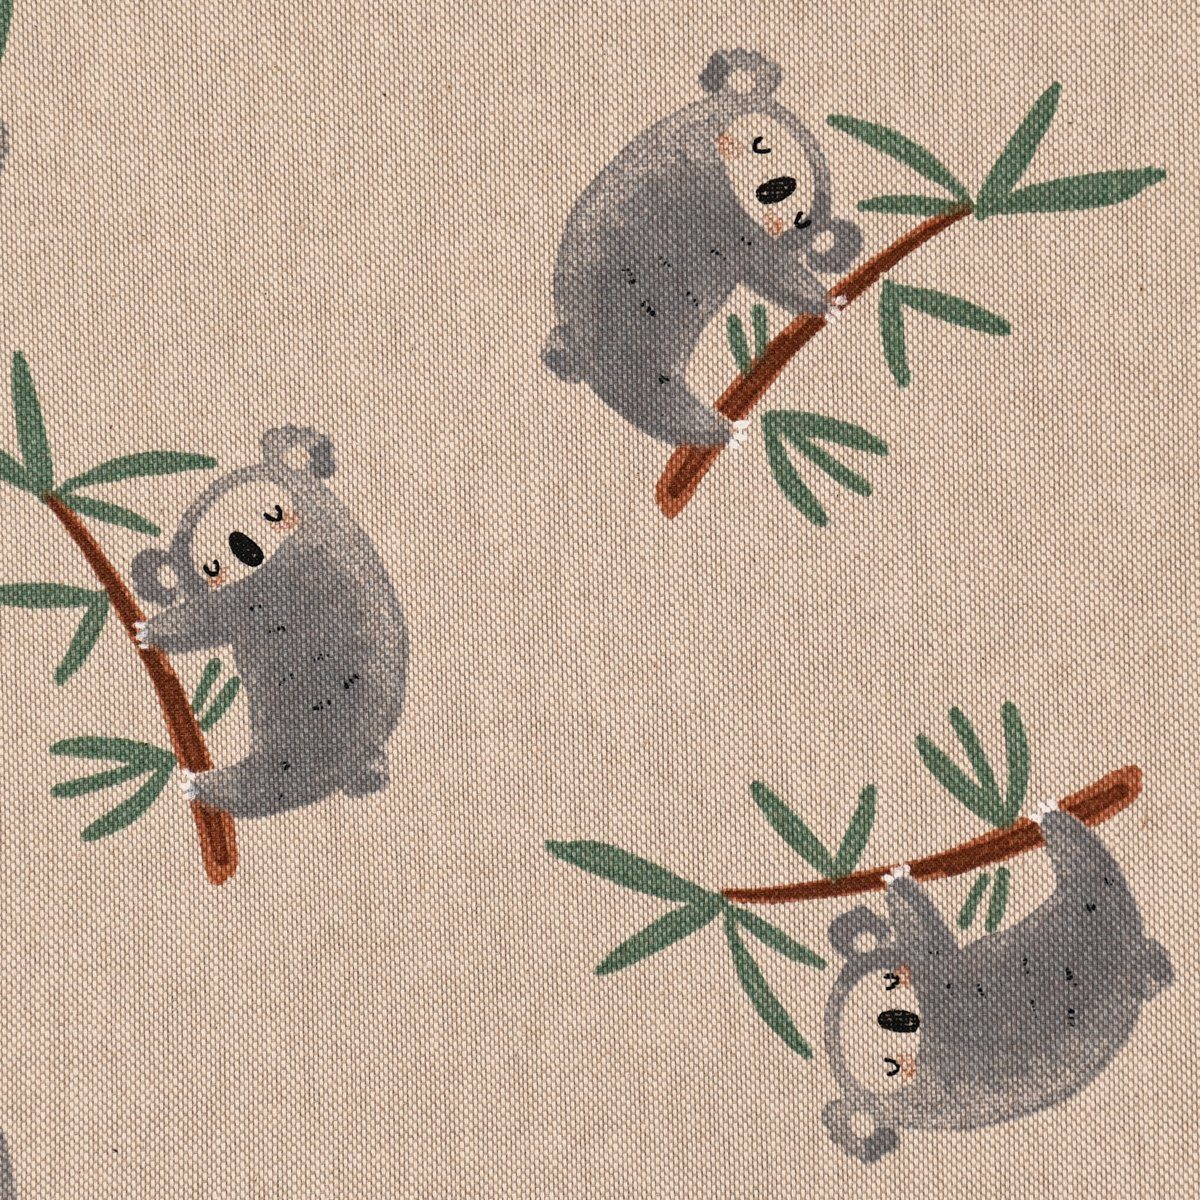 SCHÖNER LEBEN. Tischdecke SCHÖNER Zweige handmade grau, Koala natur Koalabären Sleeping Tischdecke LEBEN